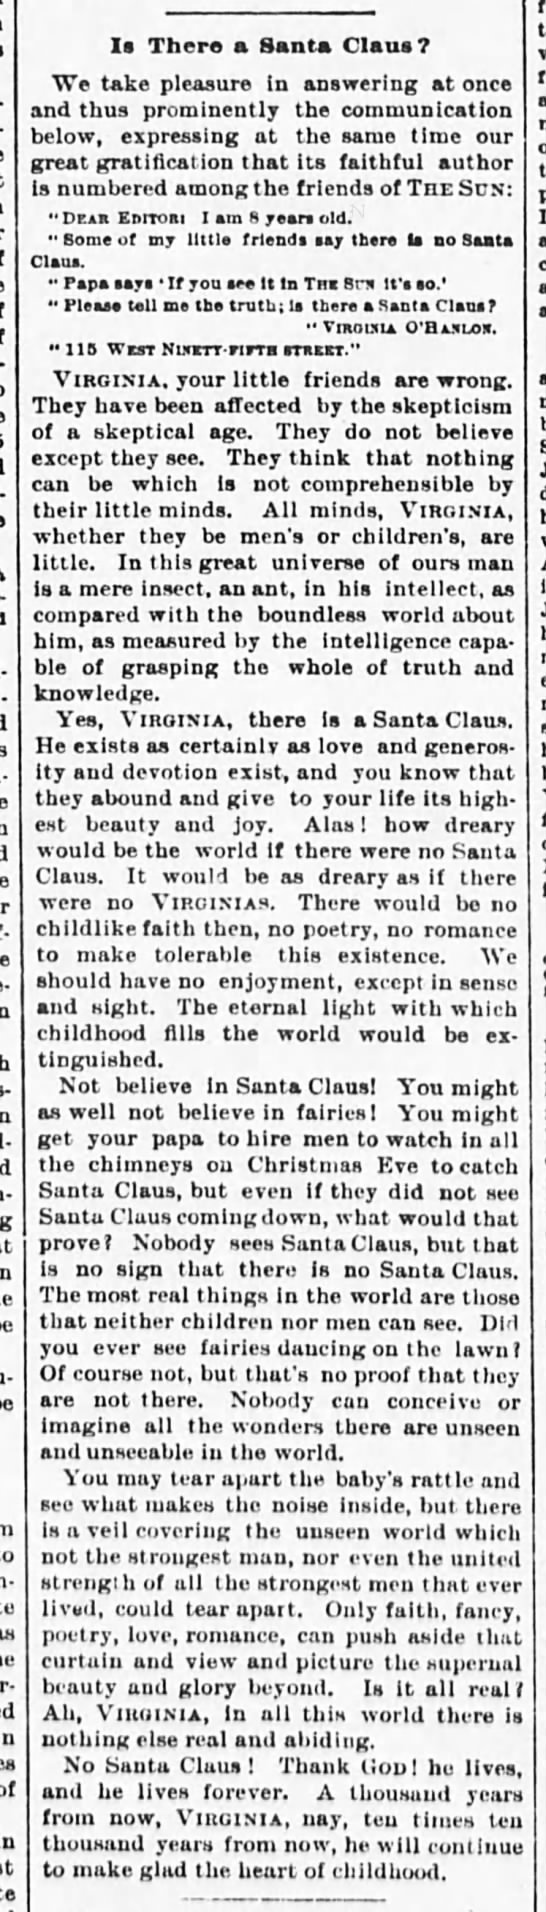 Original "Yes, Virginia, the is a Santa Claus" column - 